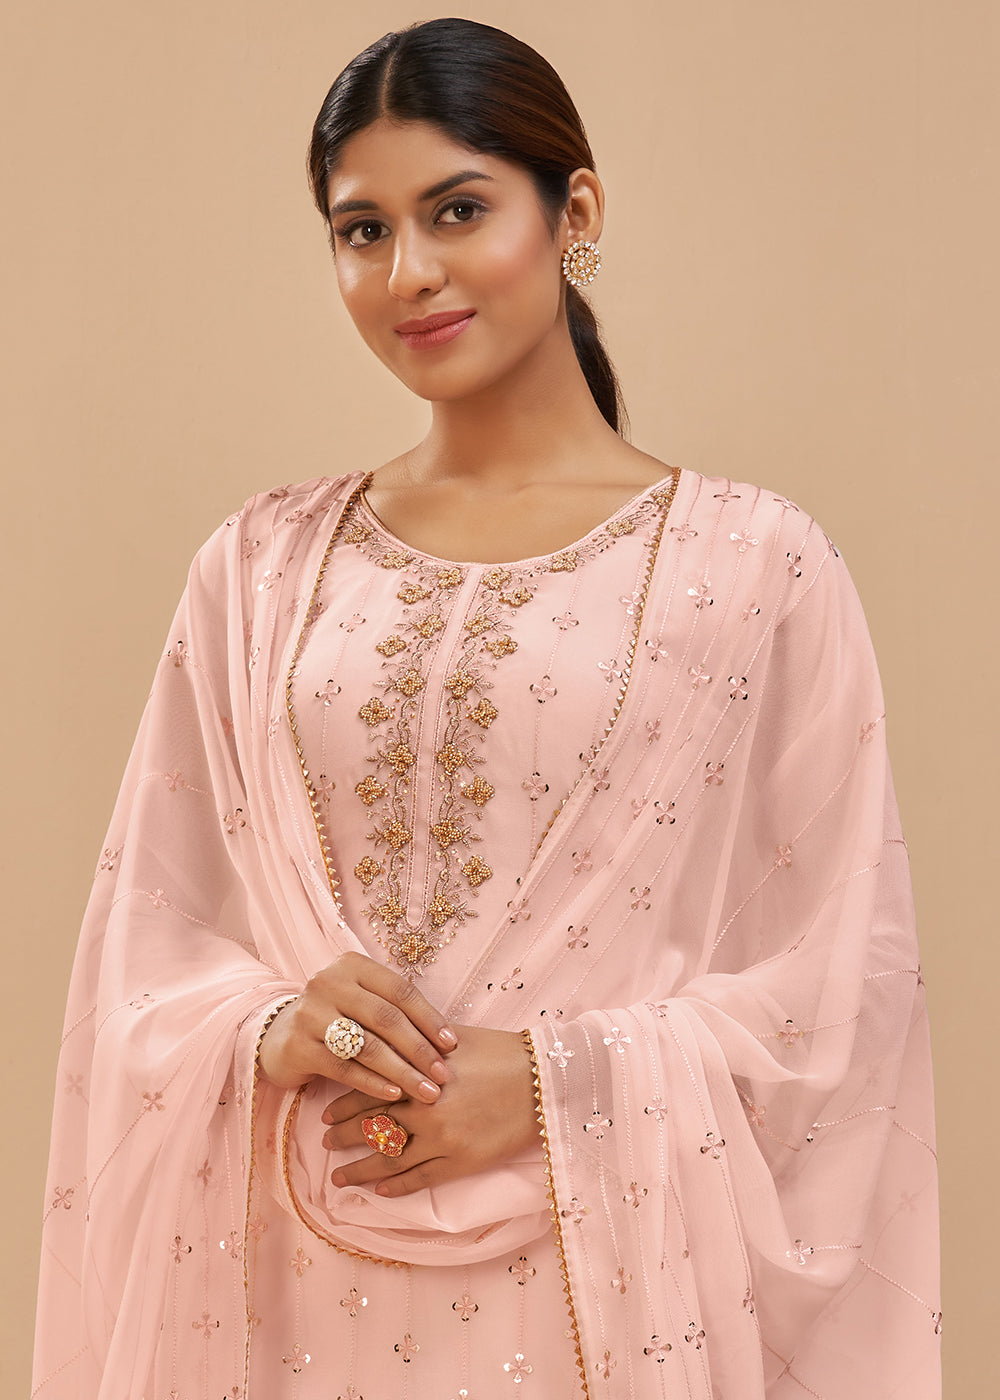 Buy Pretty Peach Beautifully Embroidered Suit - Elegant Salwar Kameez